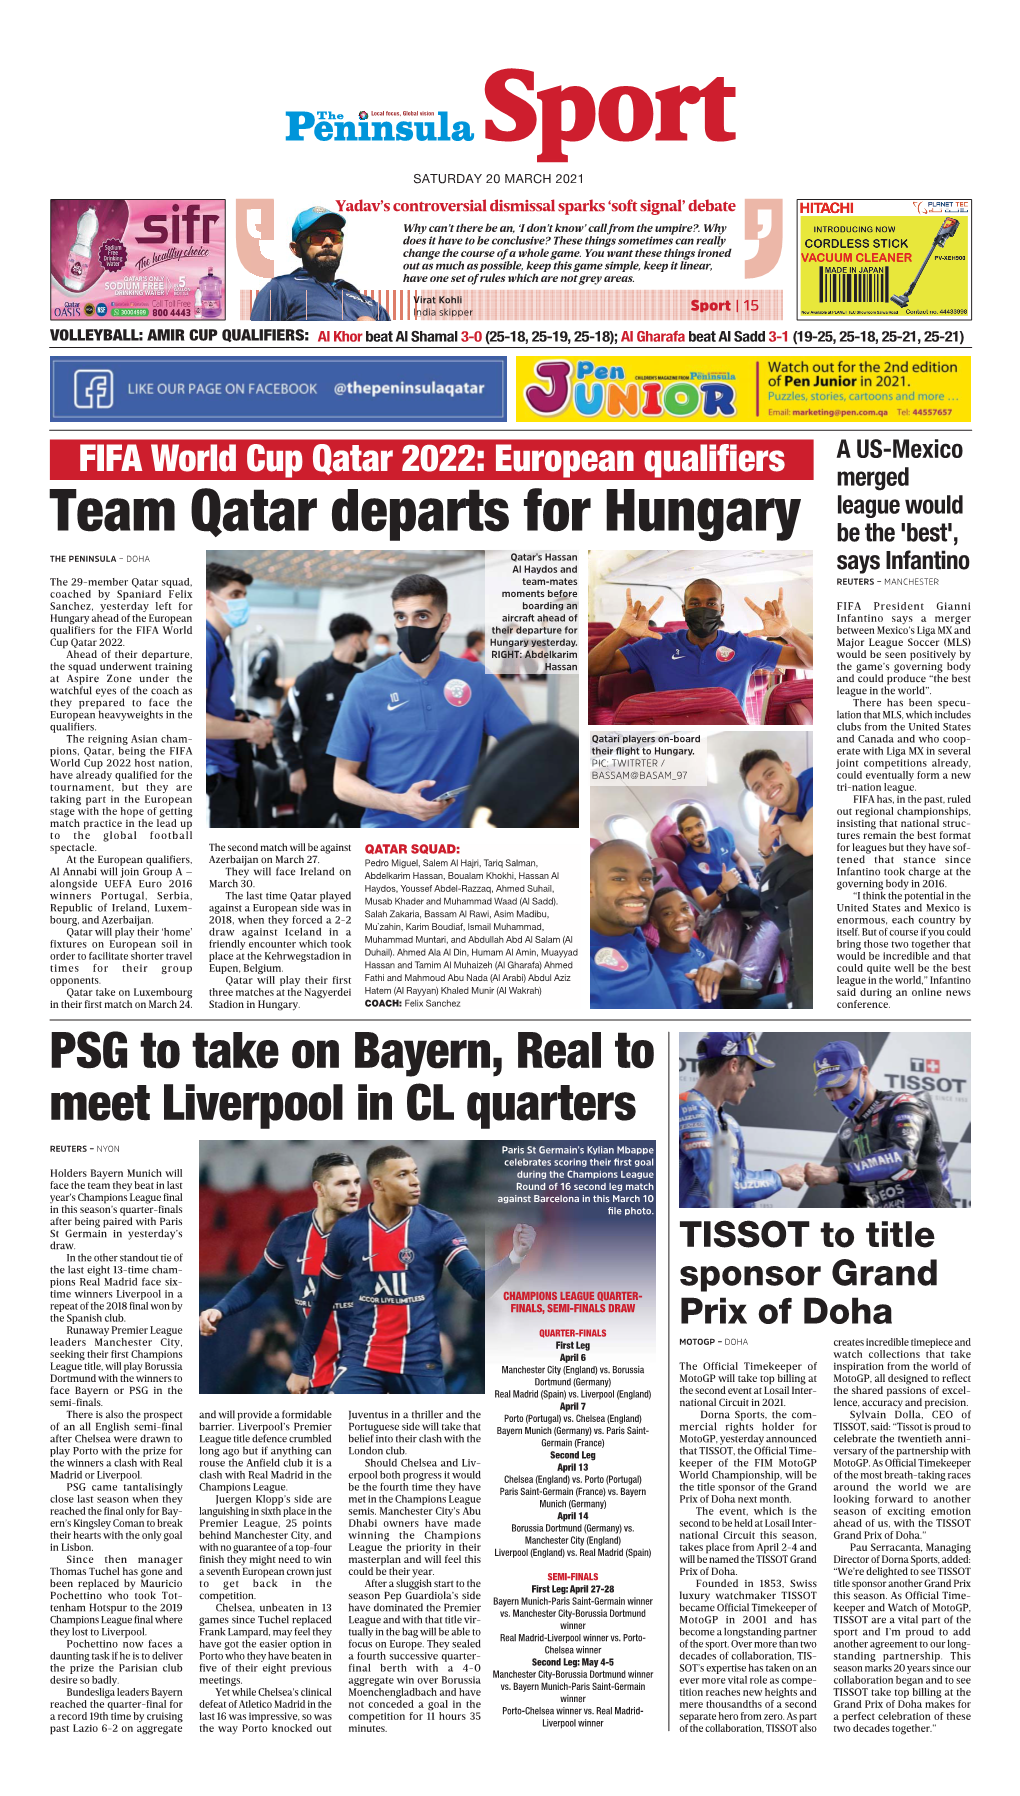 Team Qatar Departs for Hungary